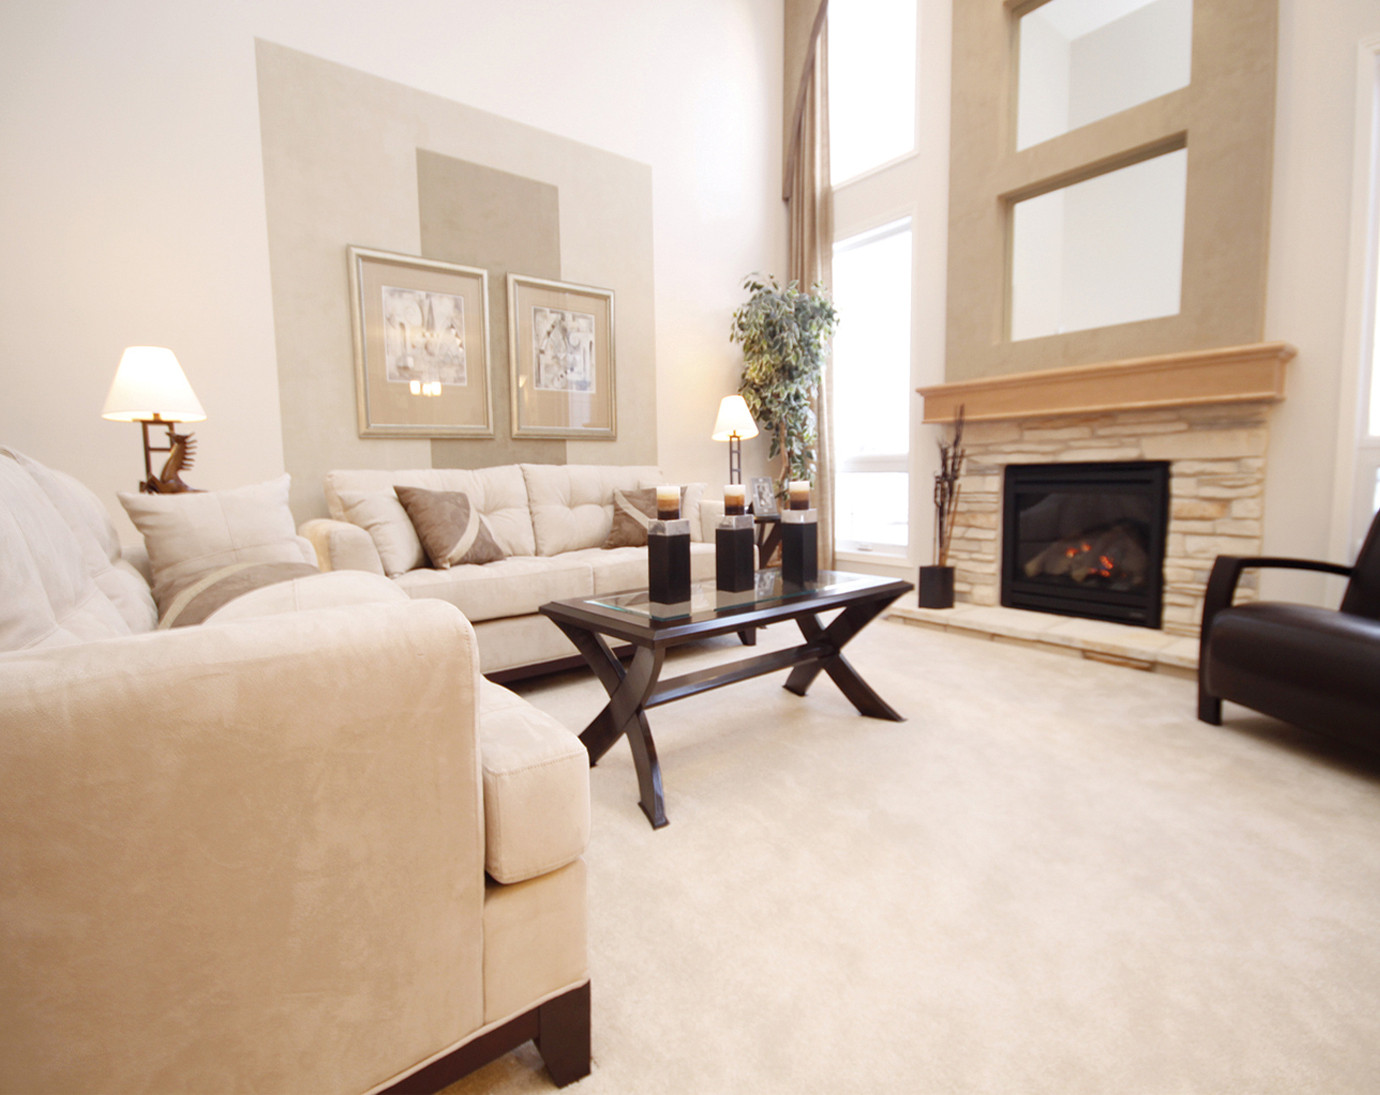 Best ideas about Family Room Carpet
. Save or Pin Living Room Carpet 1 Inspiring Design EnhancedHomes Now.